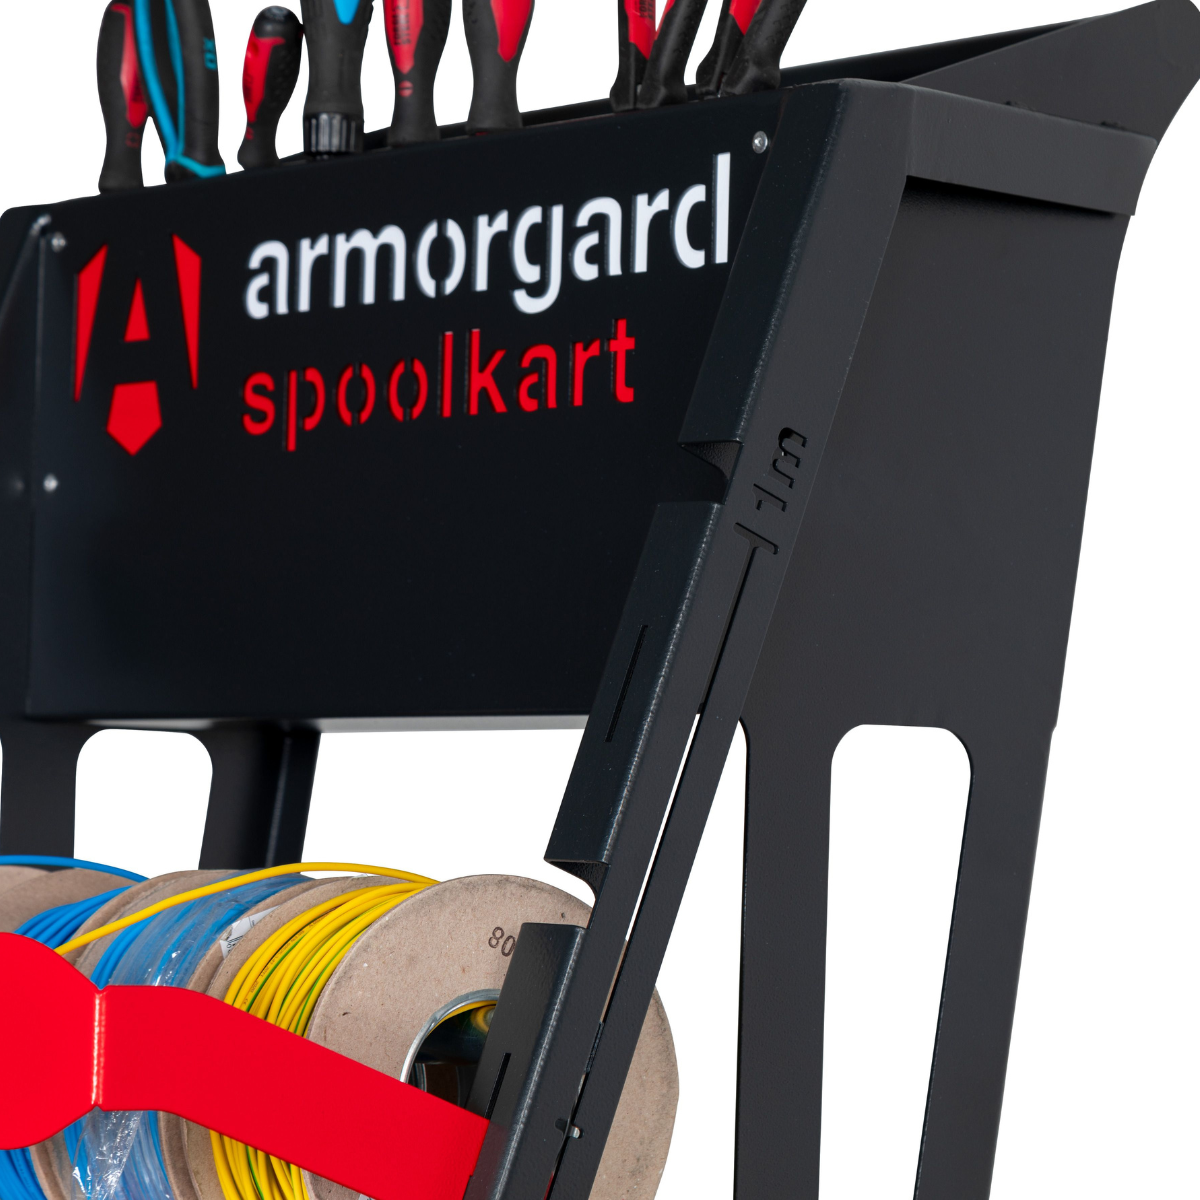 Armorgard SPK2 Spoolkart Mobile Cable Reel Cart 740x840x1365mm